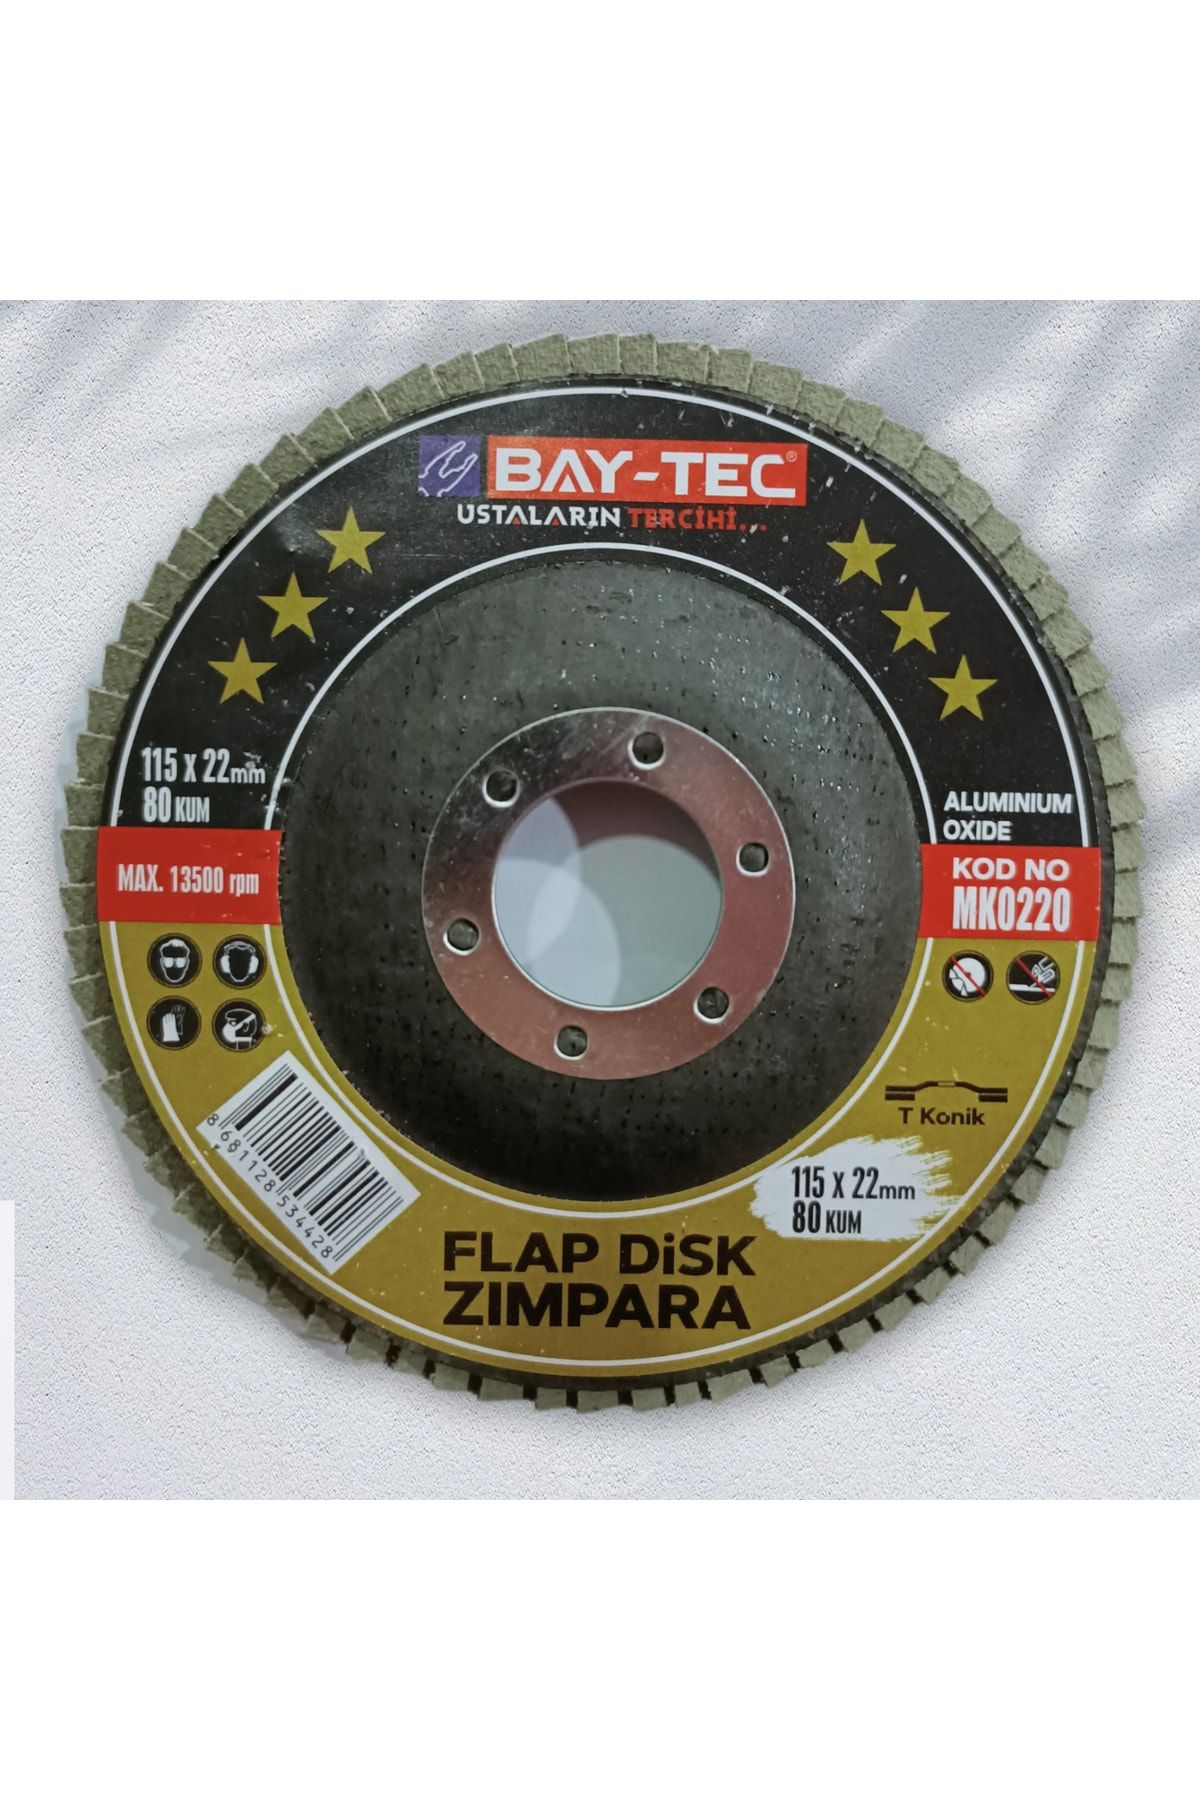 Baytec Bay-tec Flap Disk Zımpara 115 X 22mm 80 Kum 5 Adet